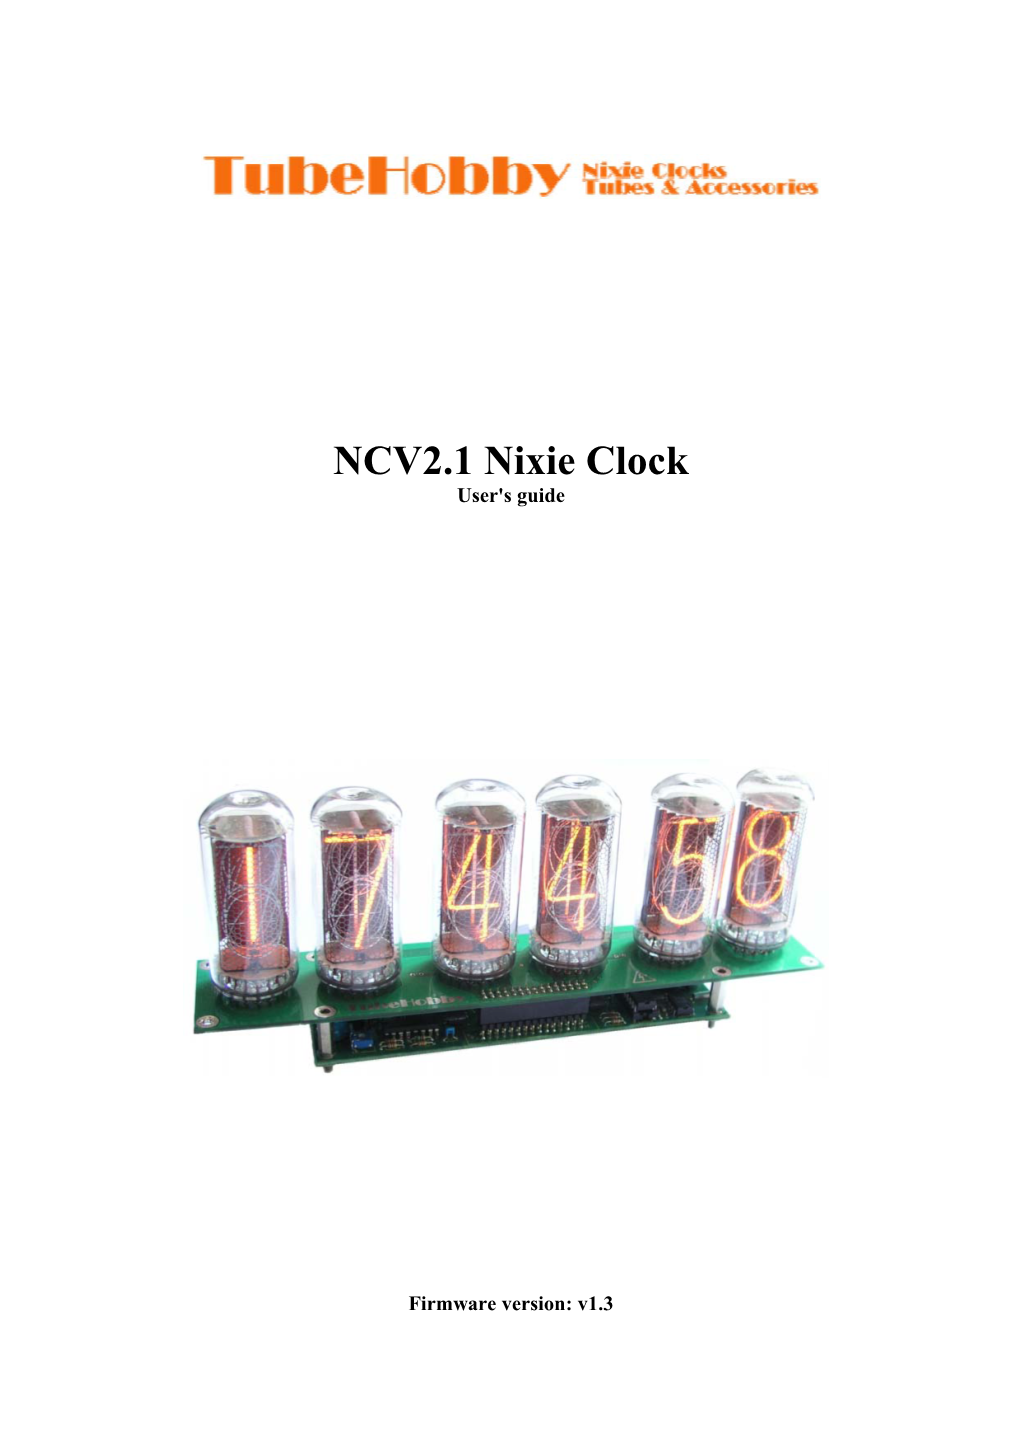 NCV2.1 Nixie Clock User's Guide